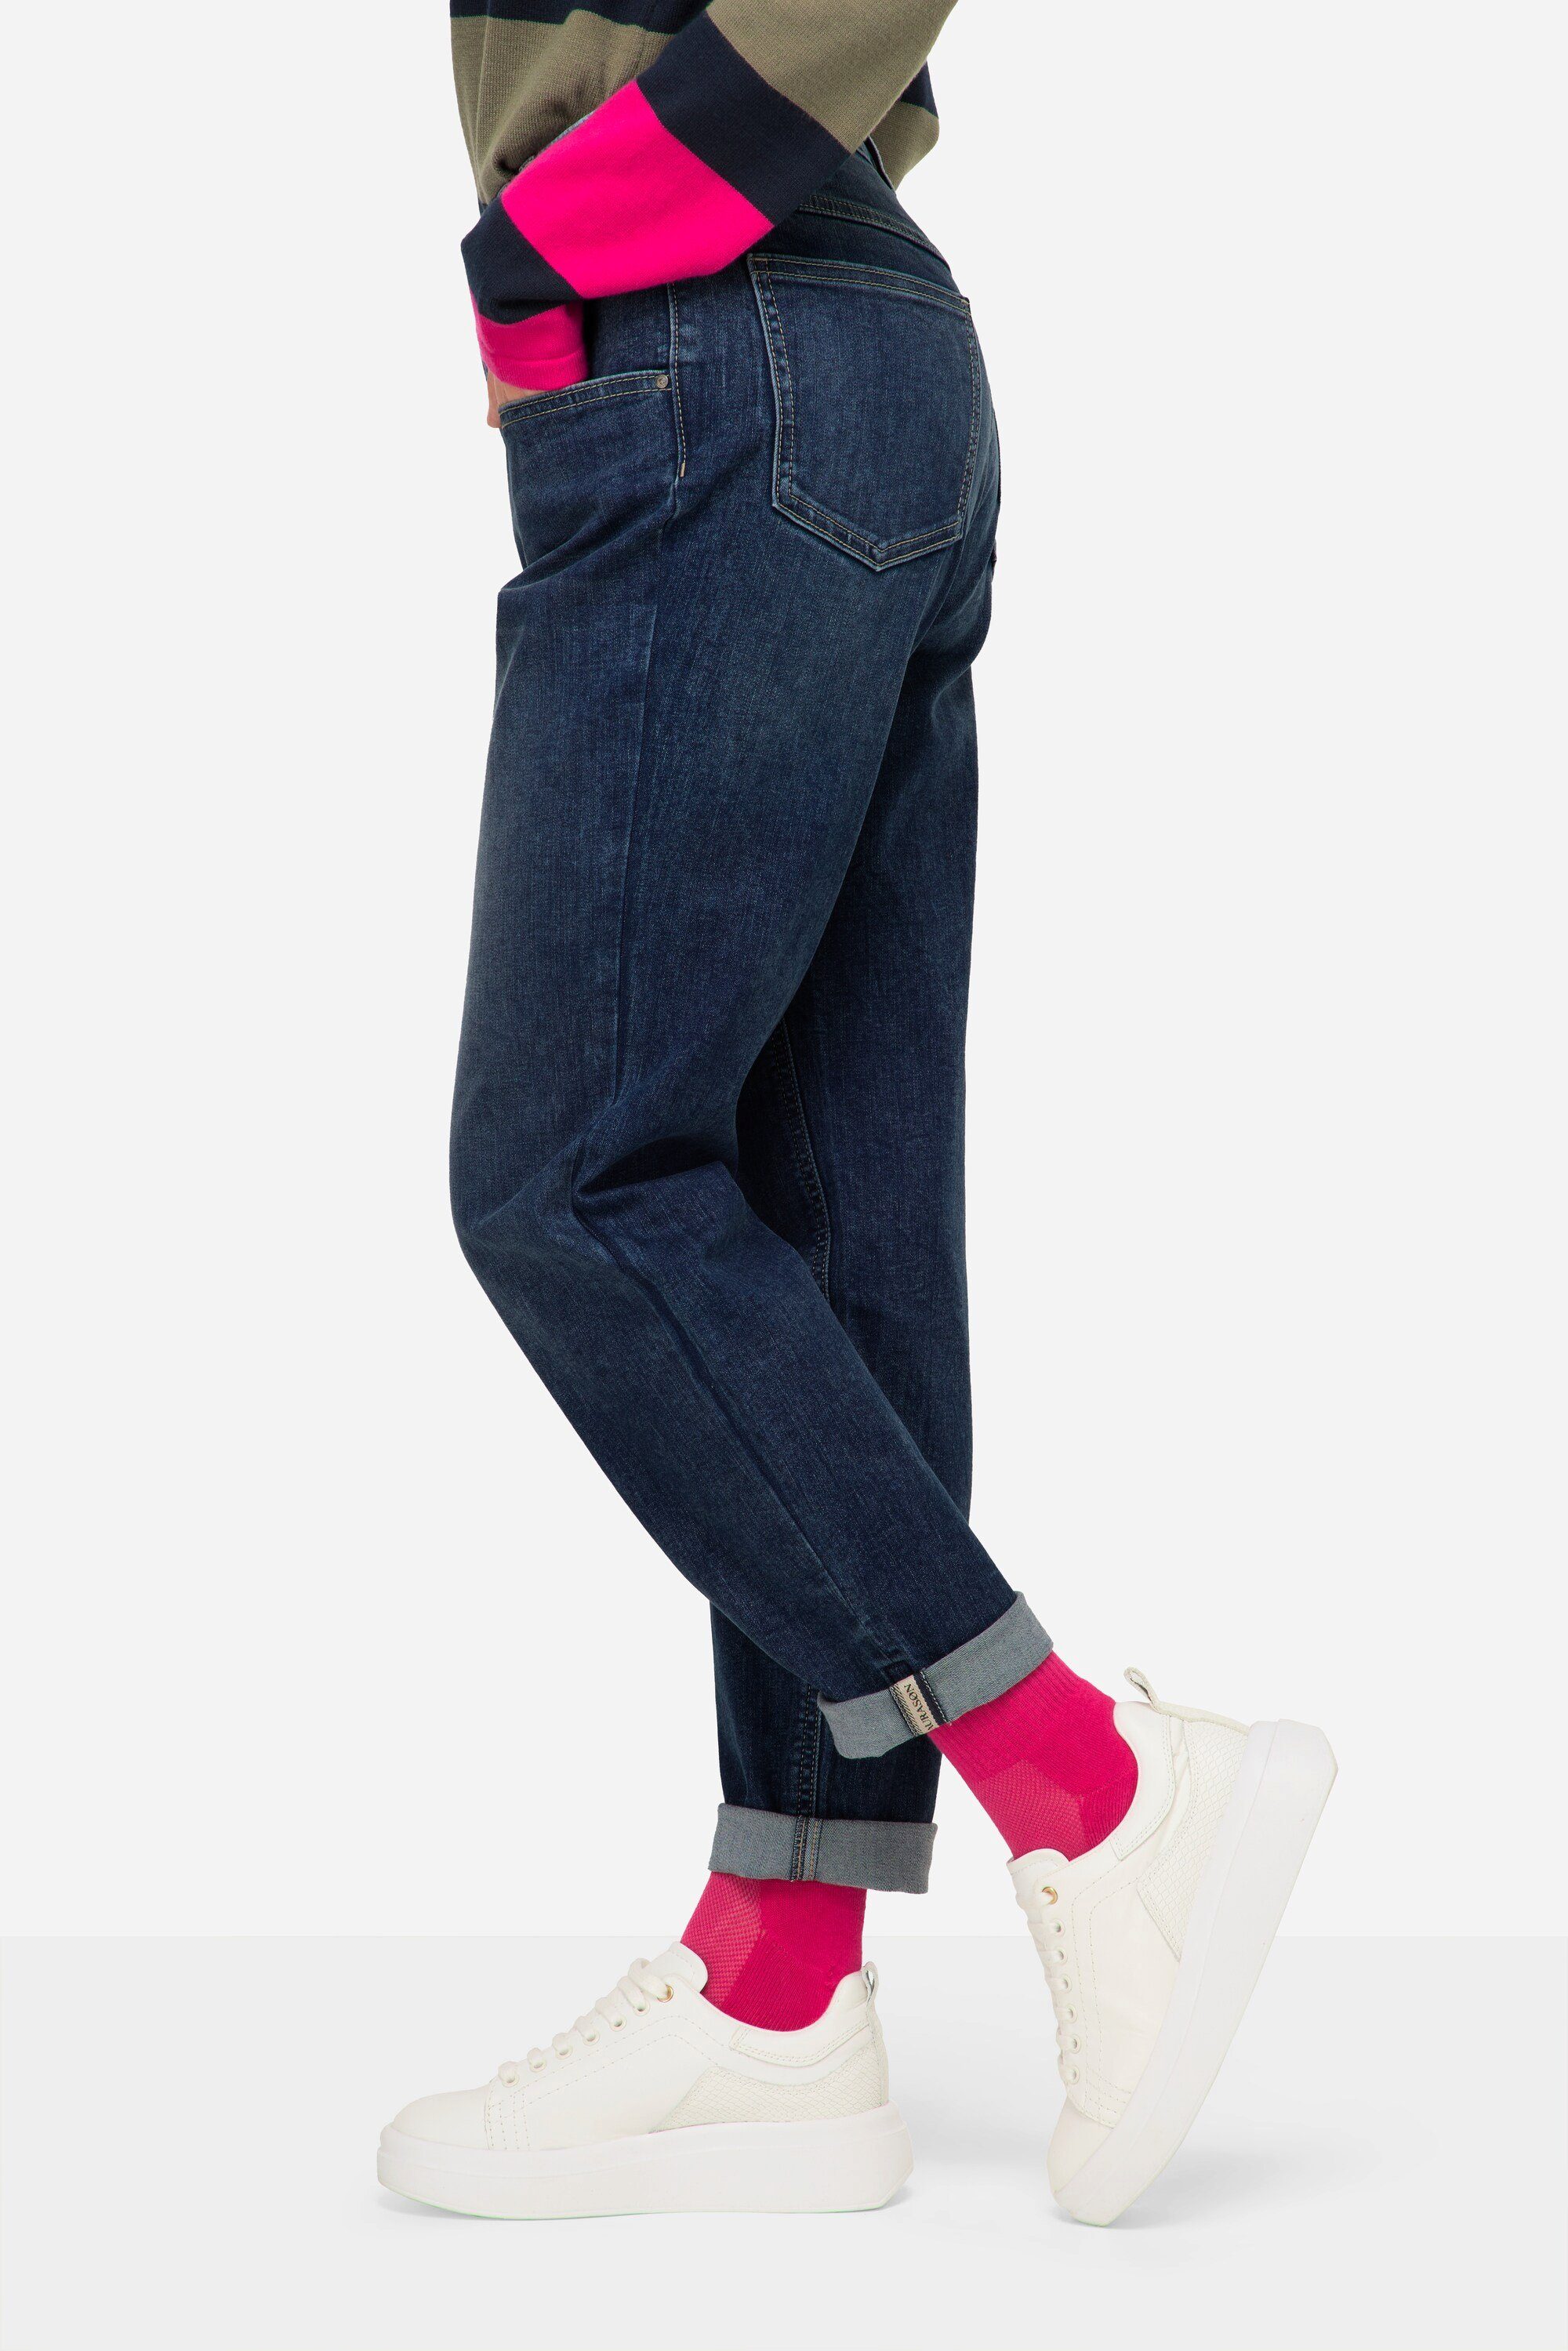 Karotten-Jeans 5-Pocket-Form Passform Regular-fit-Jeans Laurasøn weite